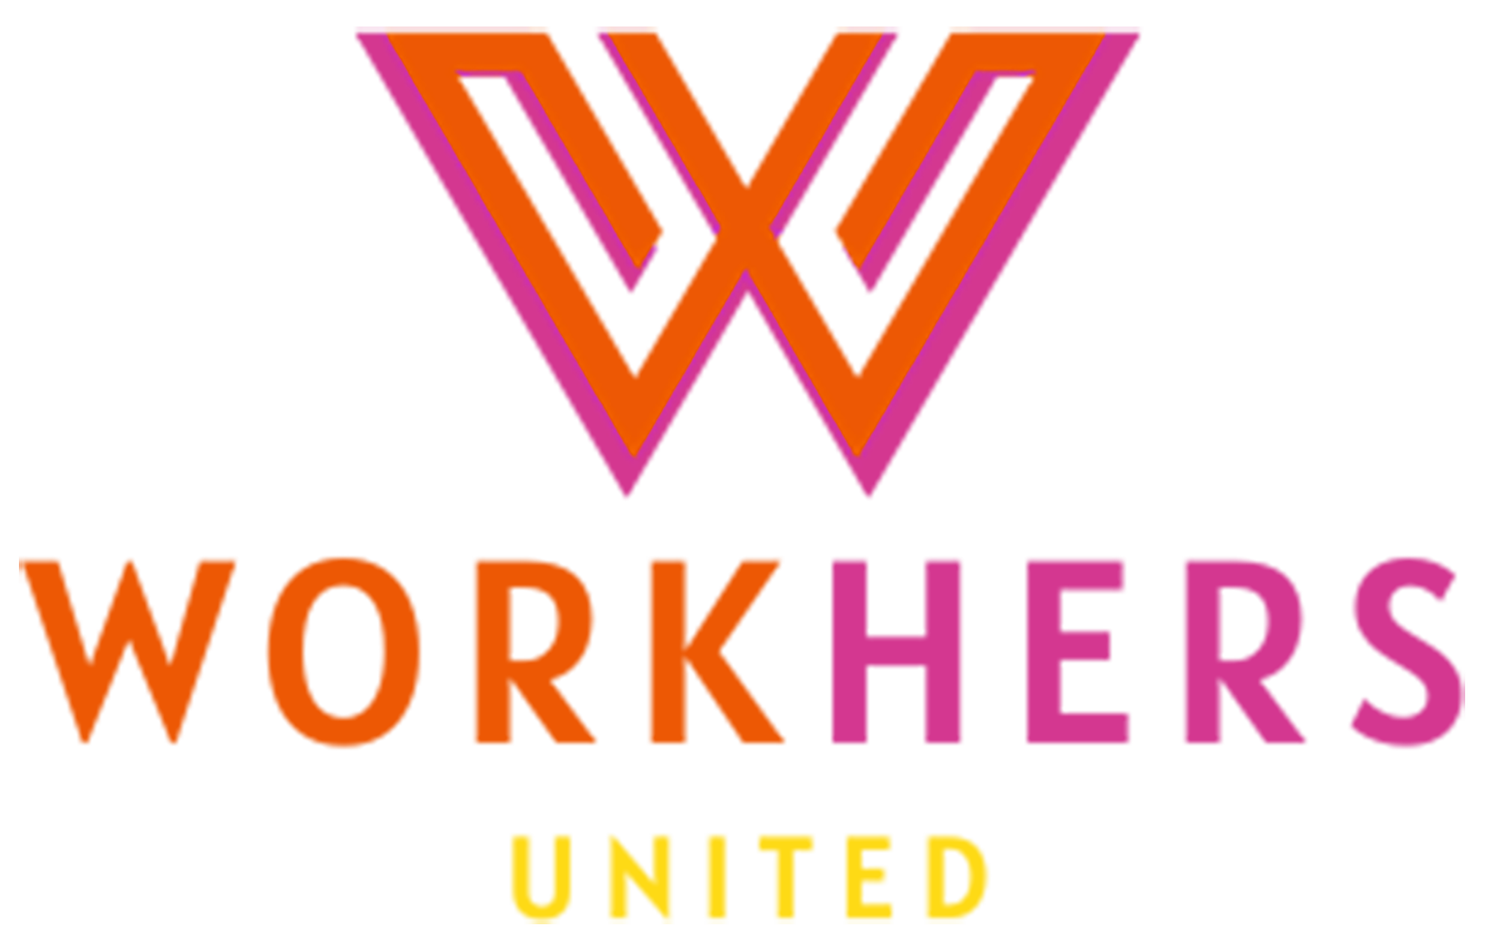 WorkHers United